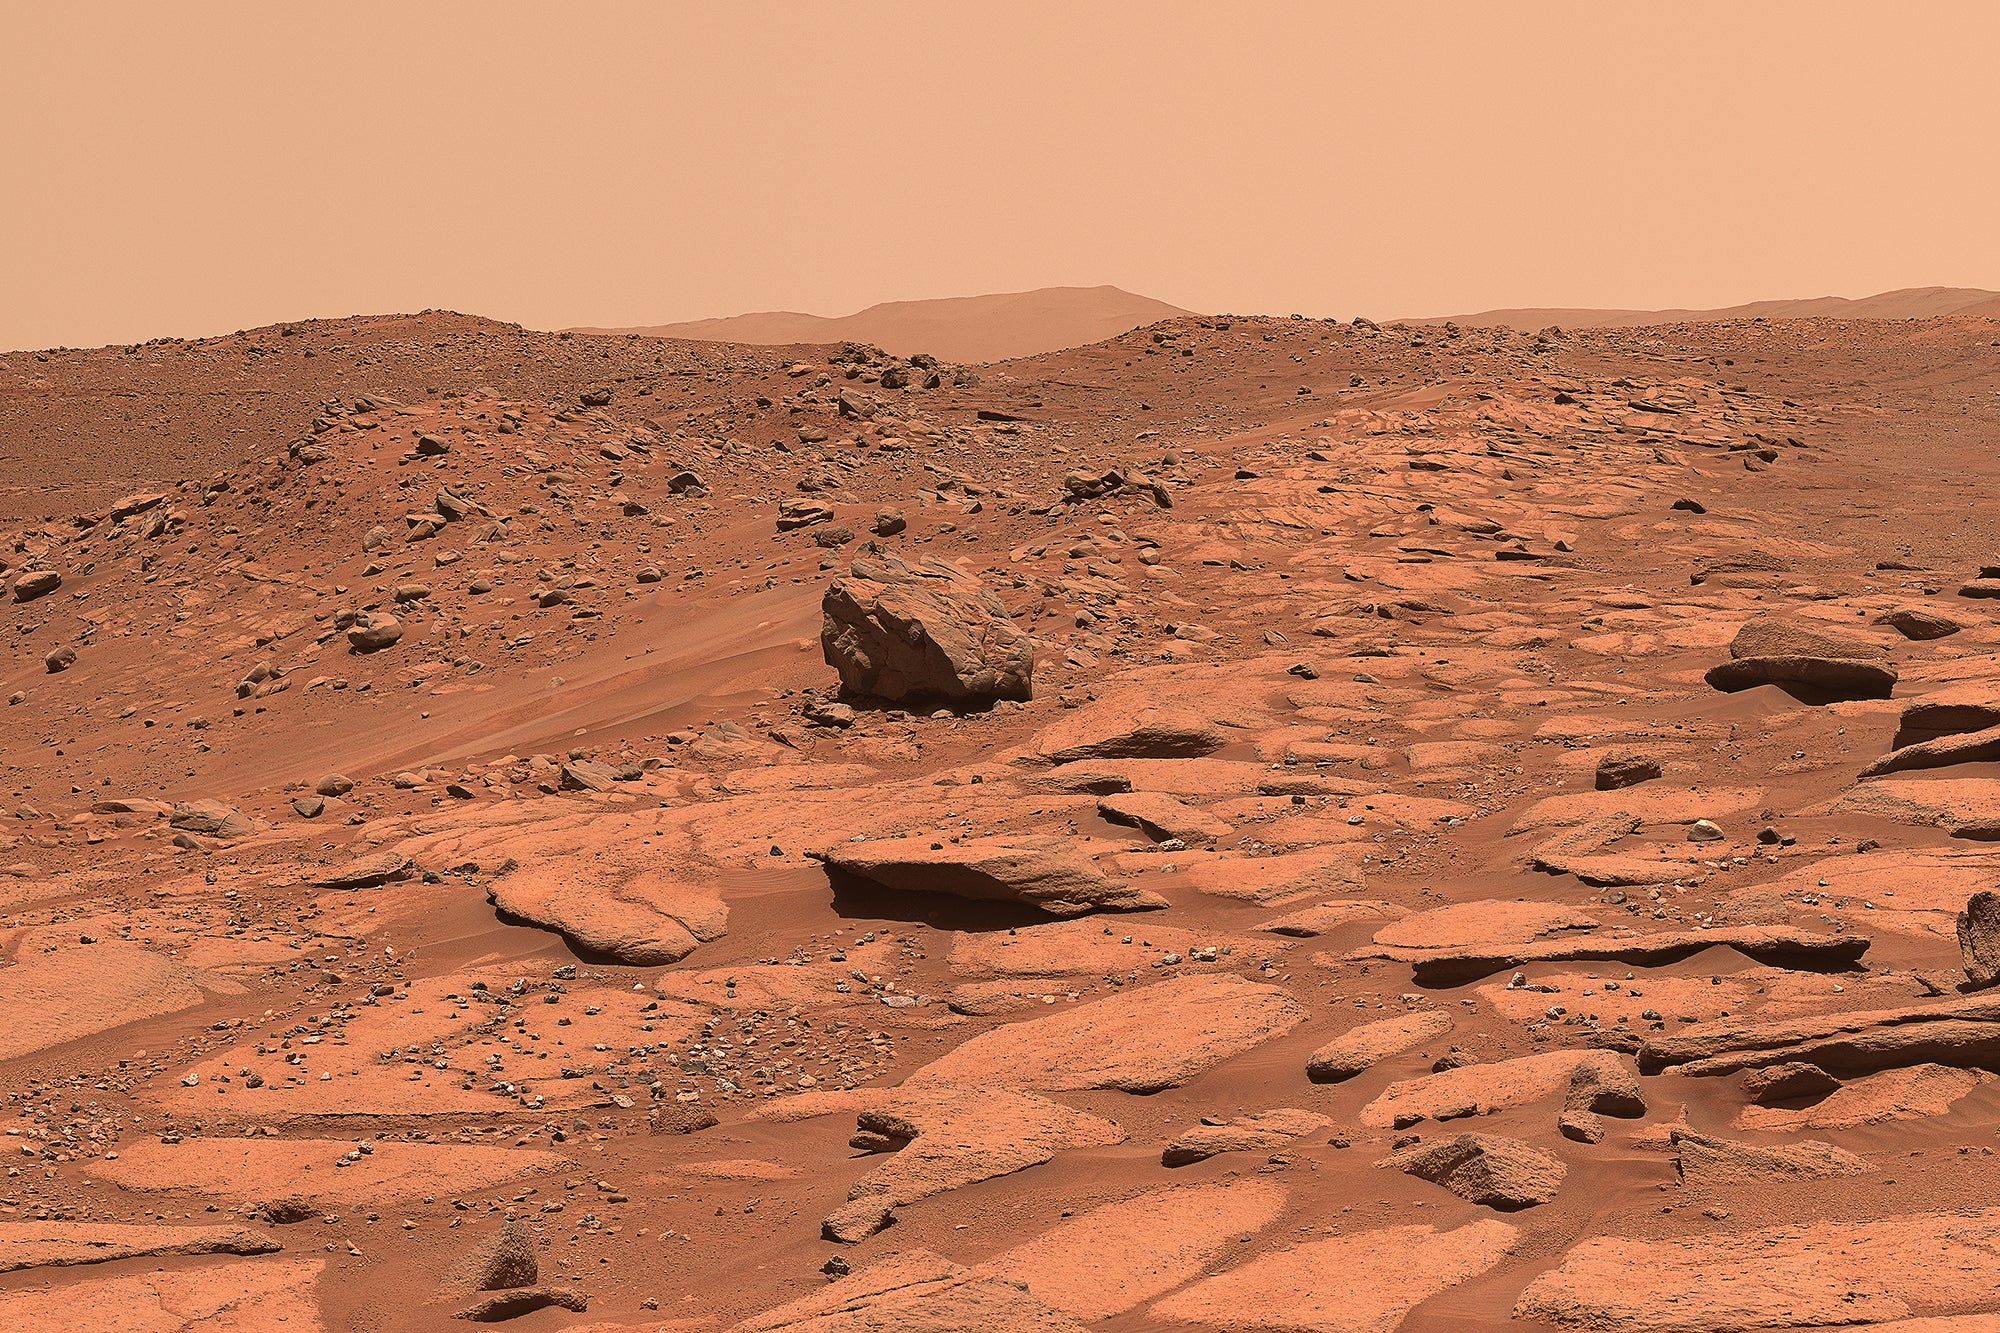 The Echo Creek rock formation on Mars.